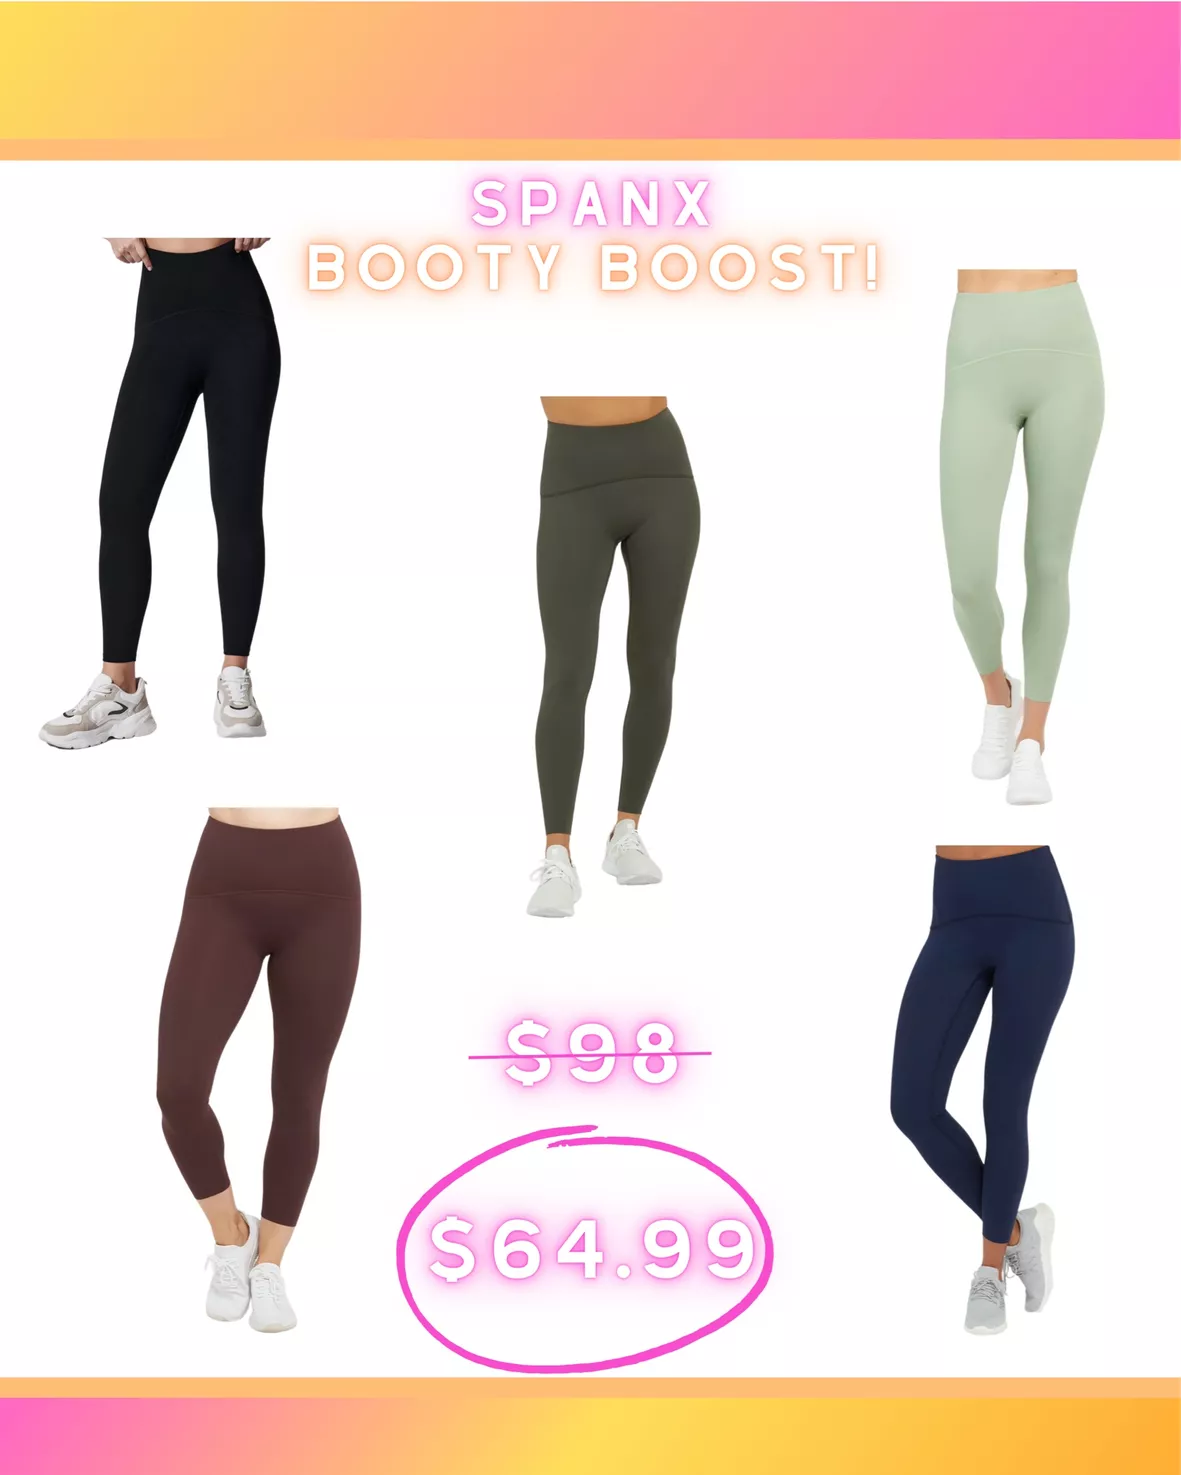 Spanx Booty Boost Yoga Pants